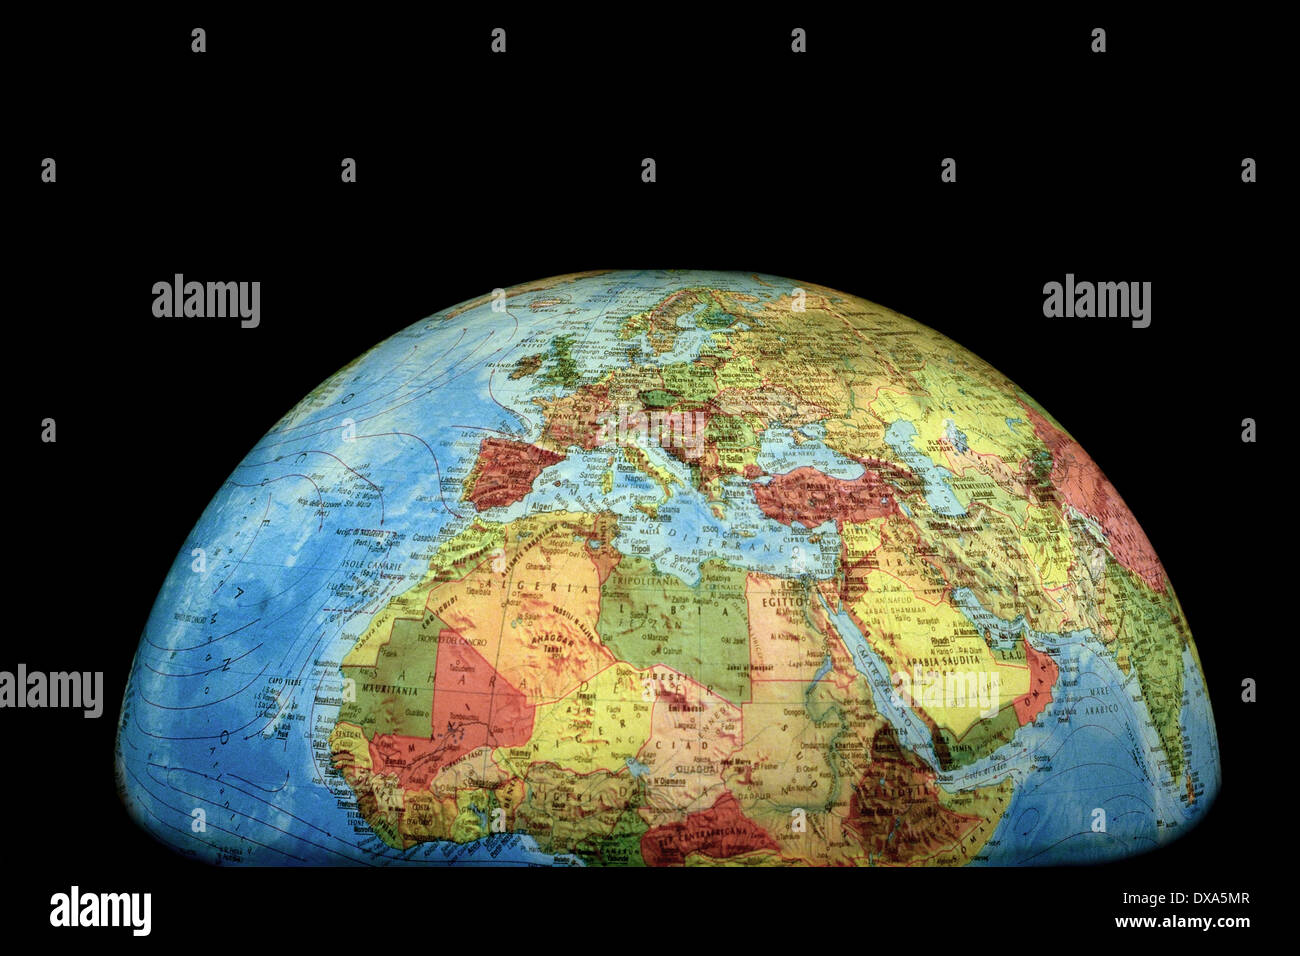 view of illuminated world map globe with background black Stock Photo